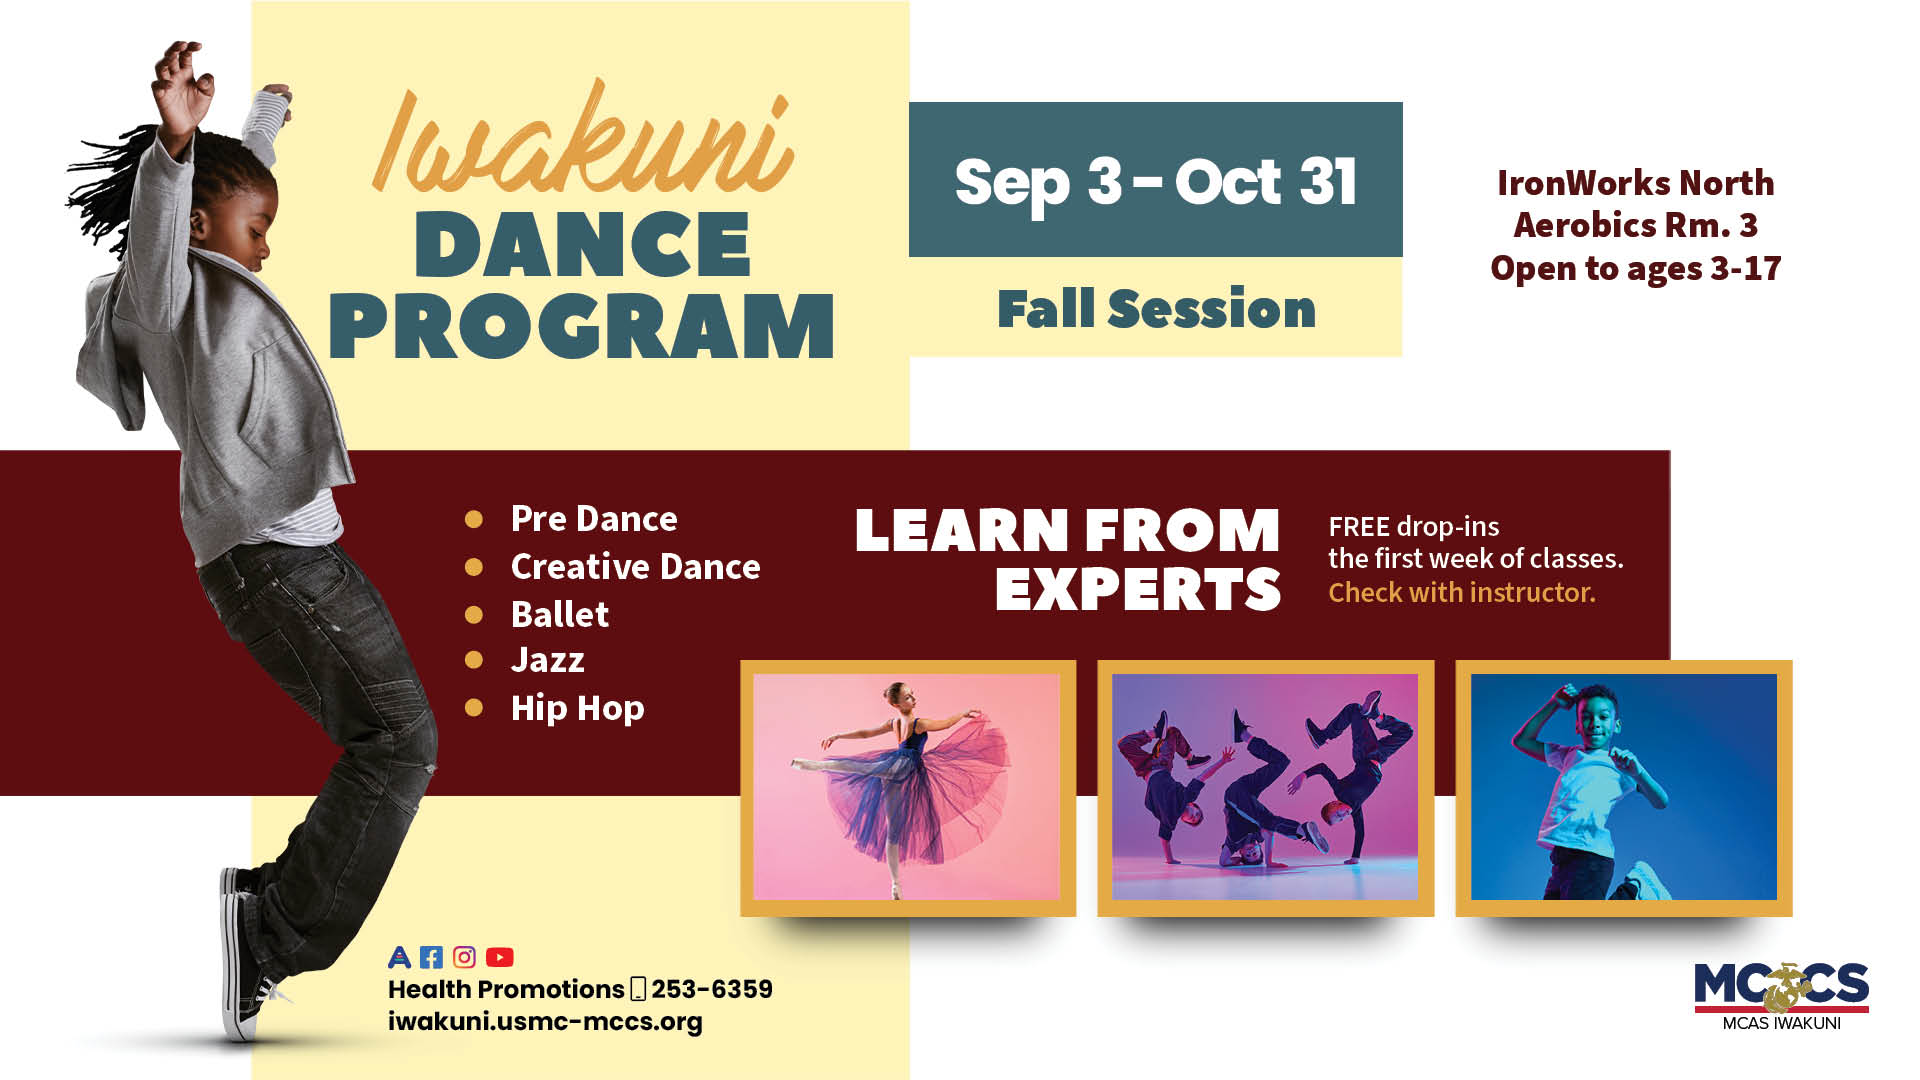 Iwakuni Dance Program - Fall Session